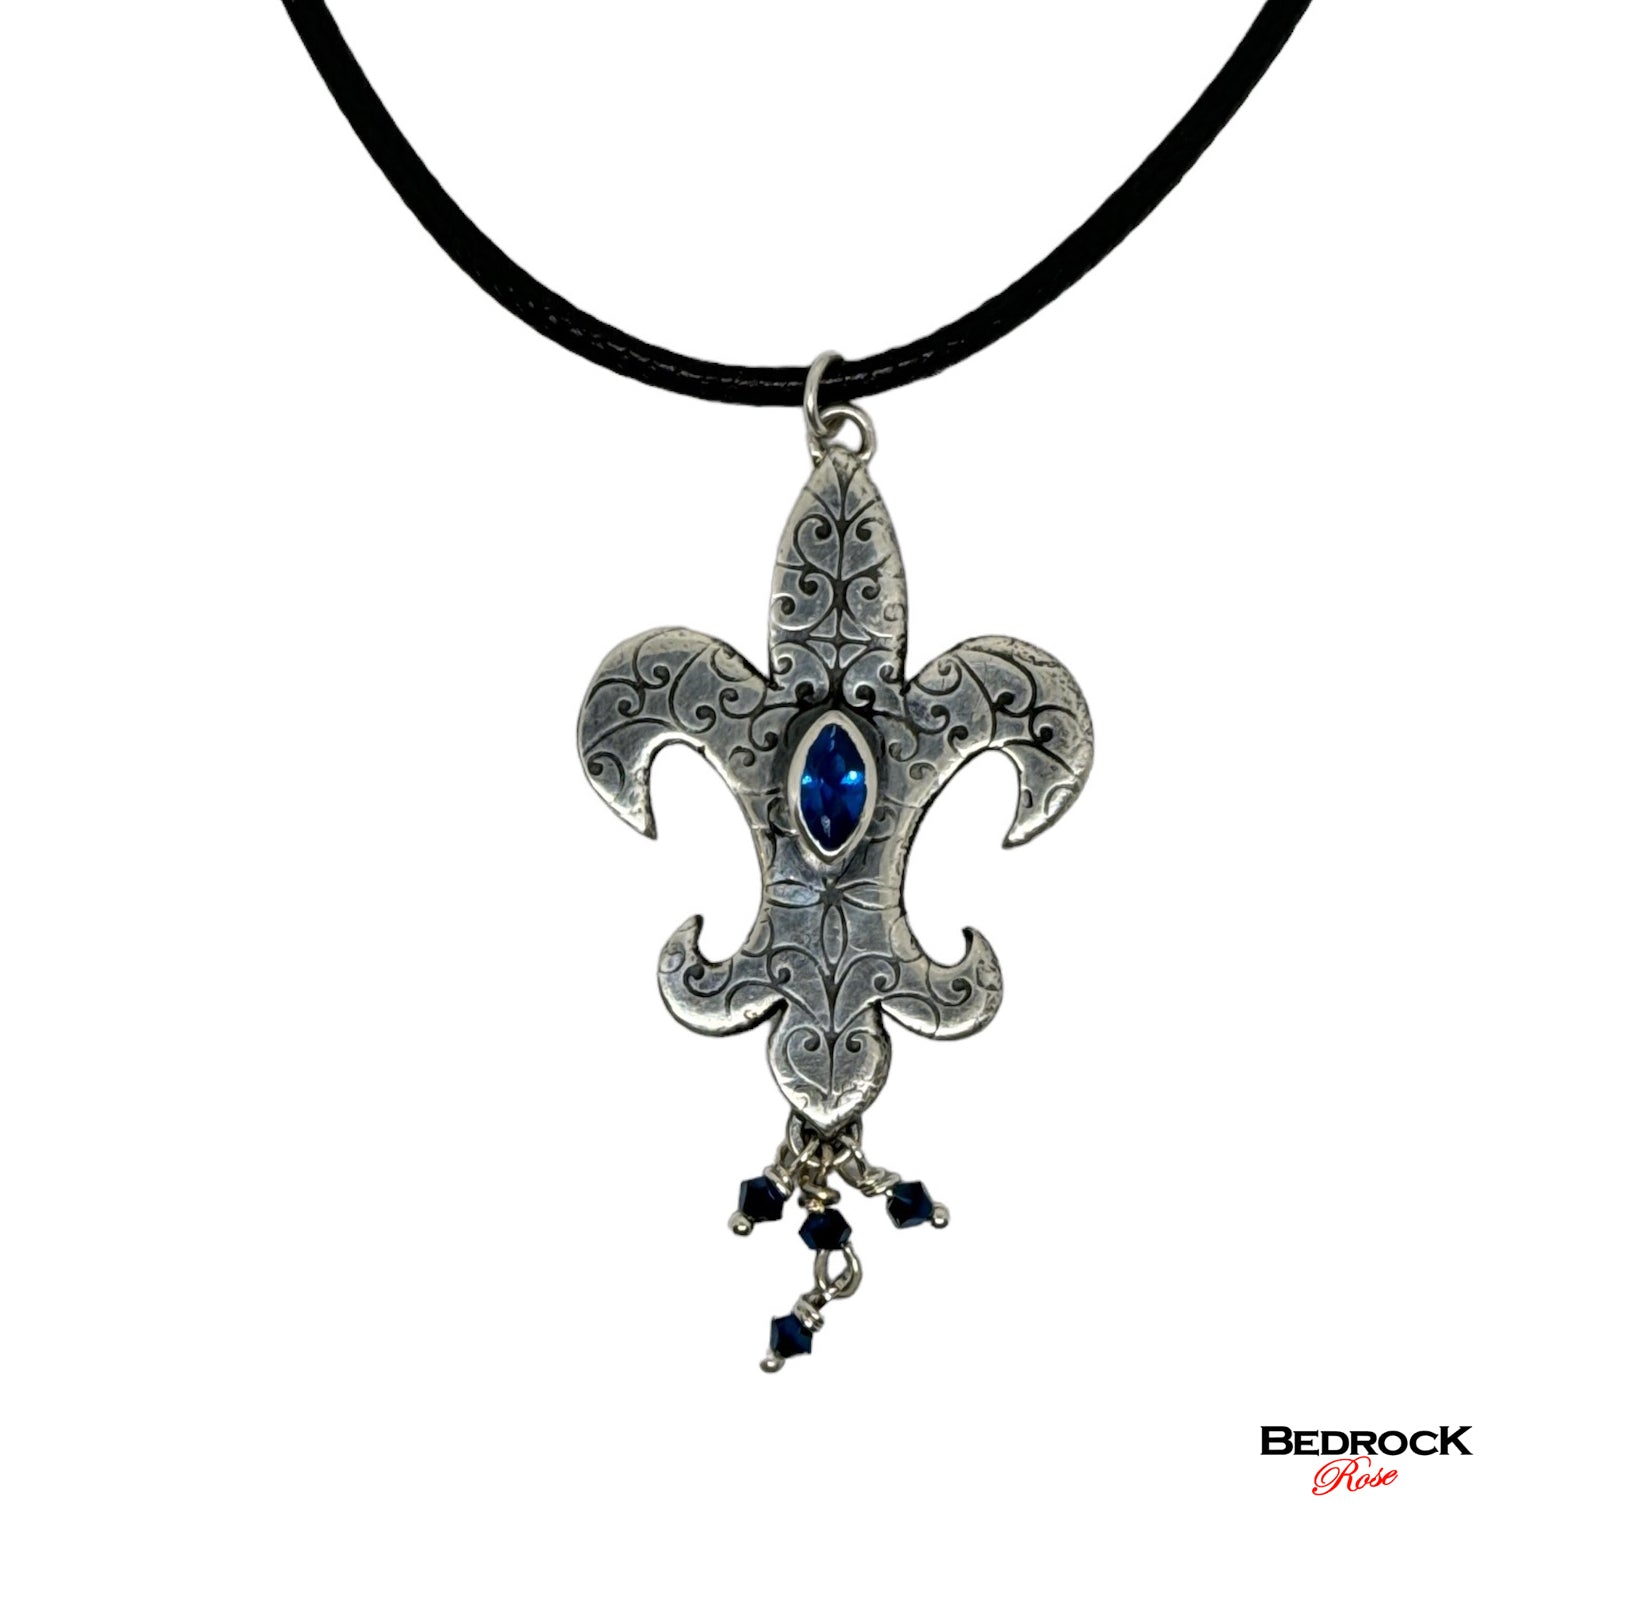 Sterling Silver Fleur-De-Lis Pendant with Marquis Blue Gemstone, Silver Mardi Gras Necklace, New Orleans Mardi Gras jewelry, Handcrafted Fleur-De-Lis Pendant